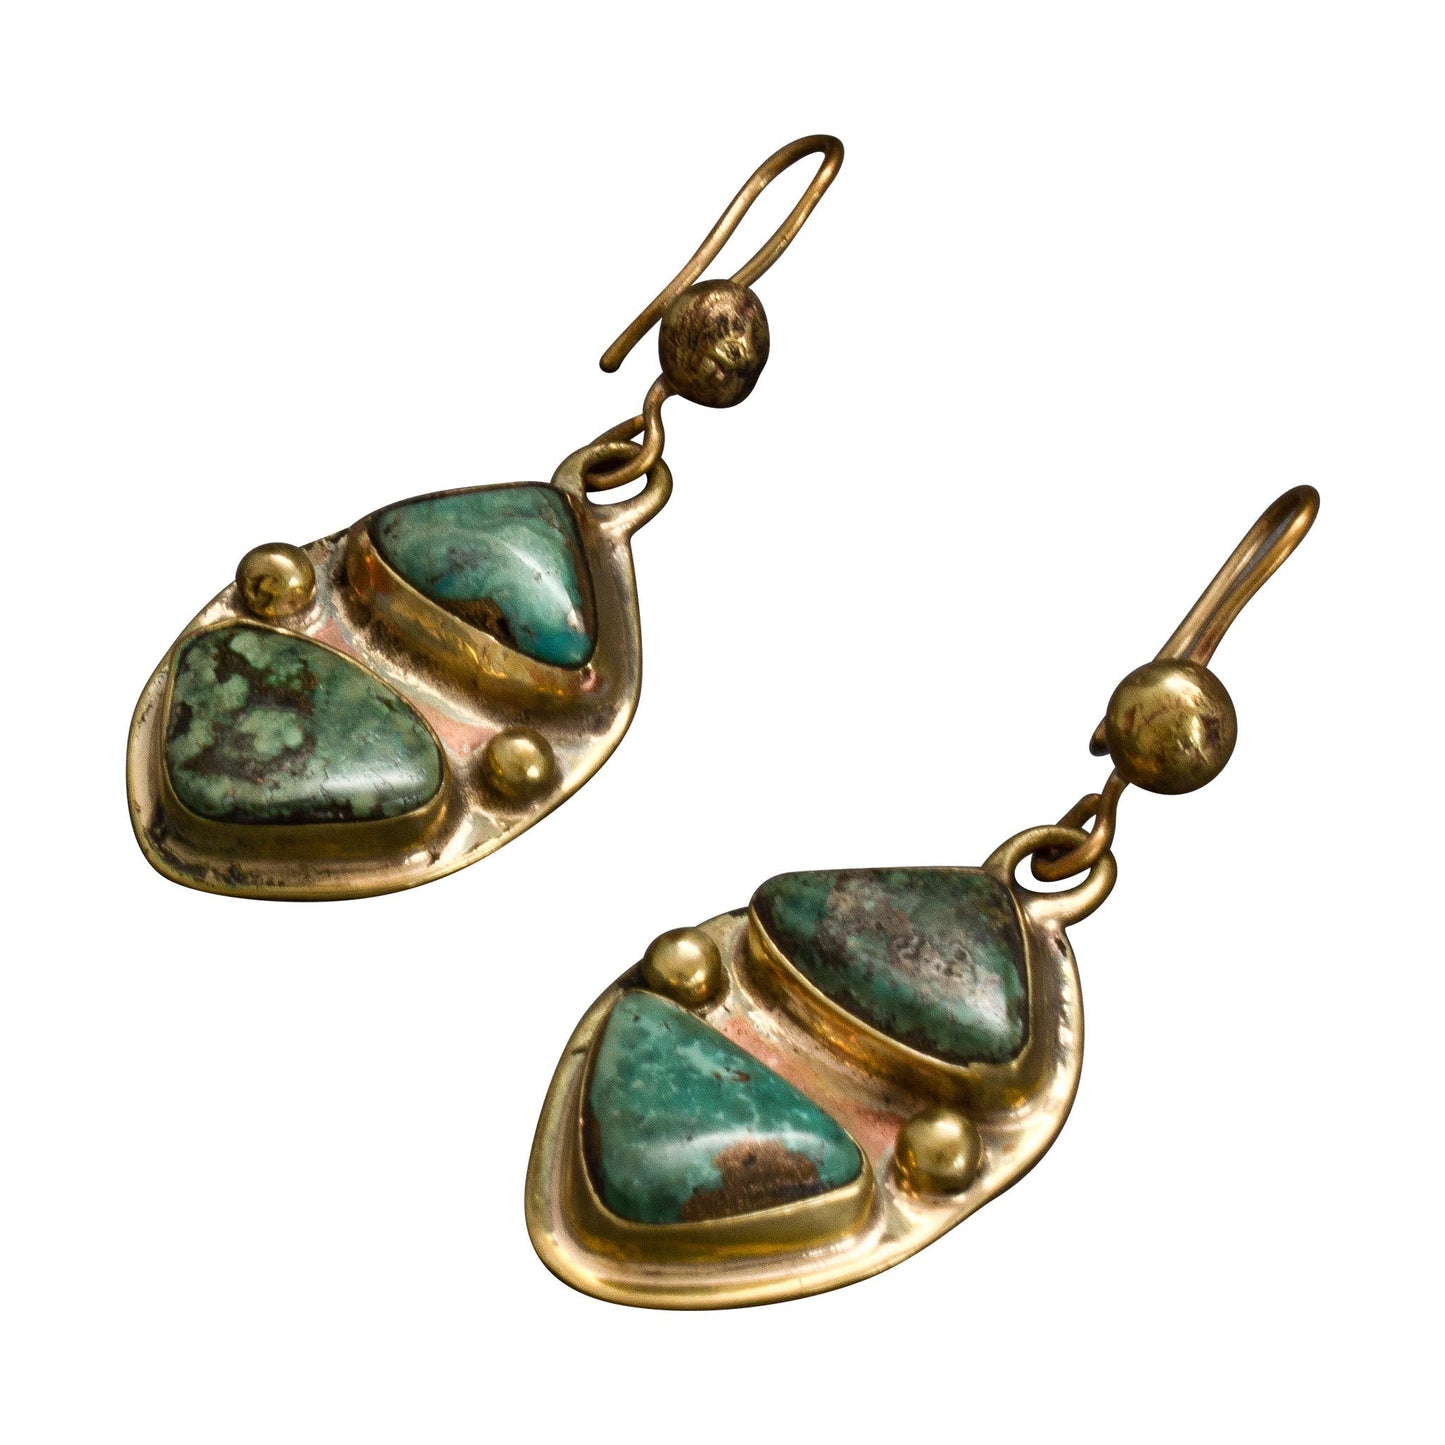 Vintage Tony Aguilar Sr. Turquoise Earrings Set in Brass - Turquoise & Tufa